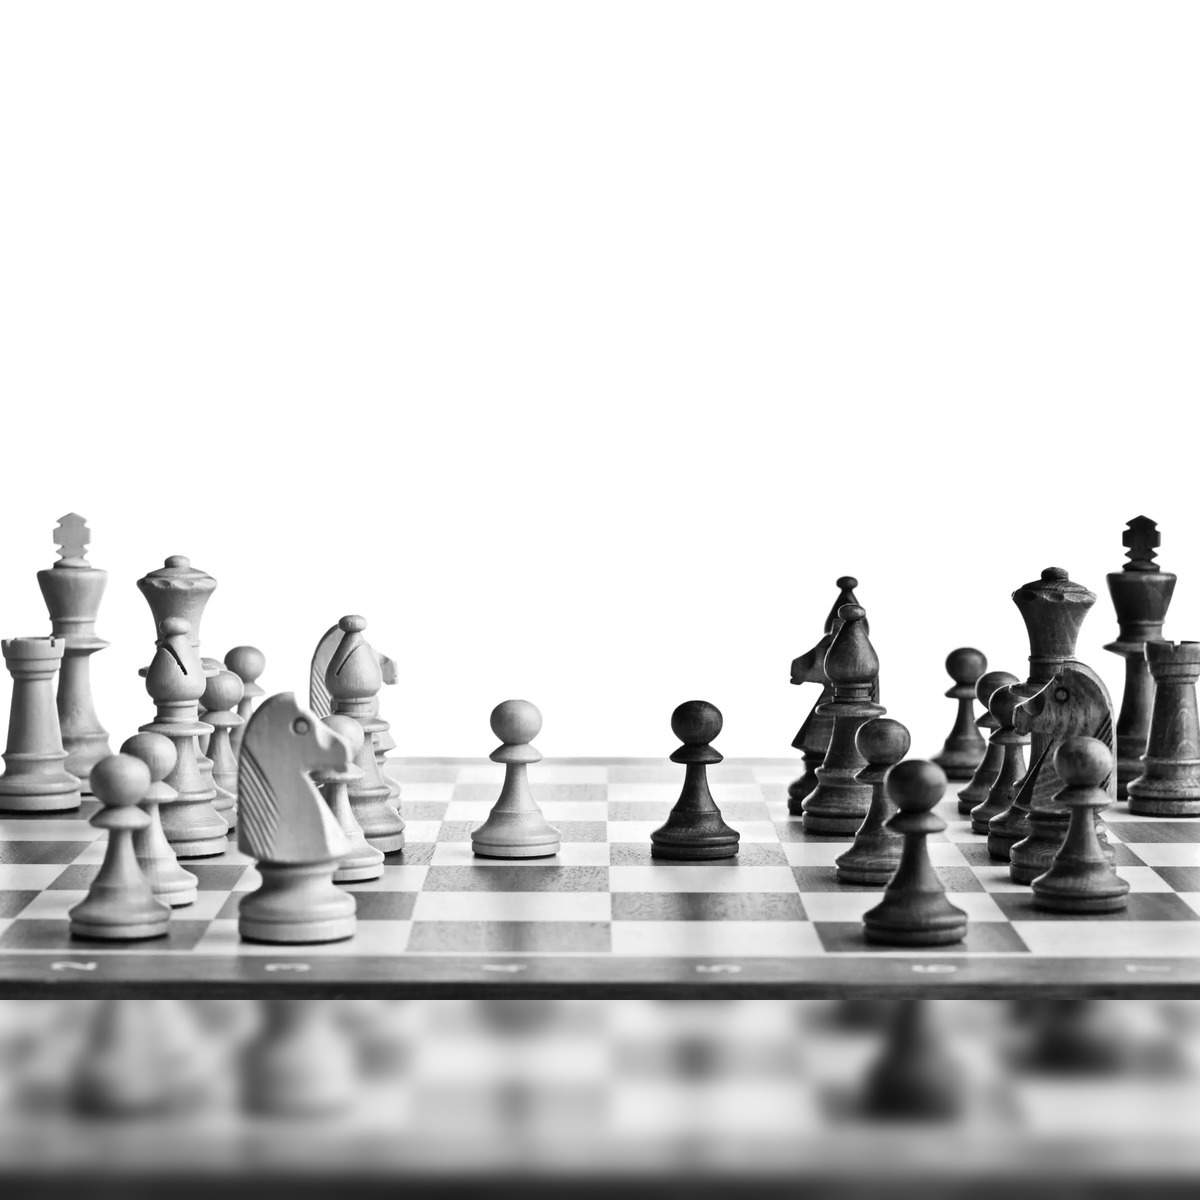 Viswanathan Anand set to launch chess fellowship program